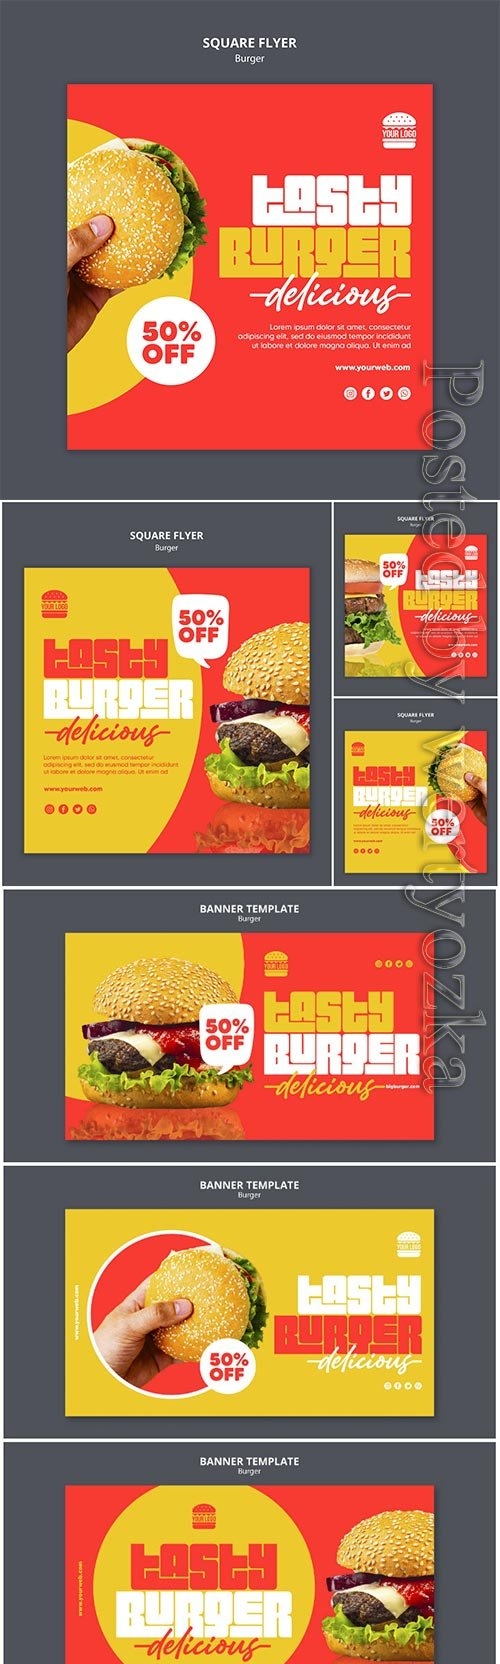 Burger concept banner template psd